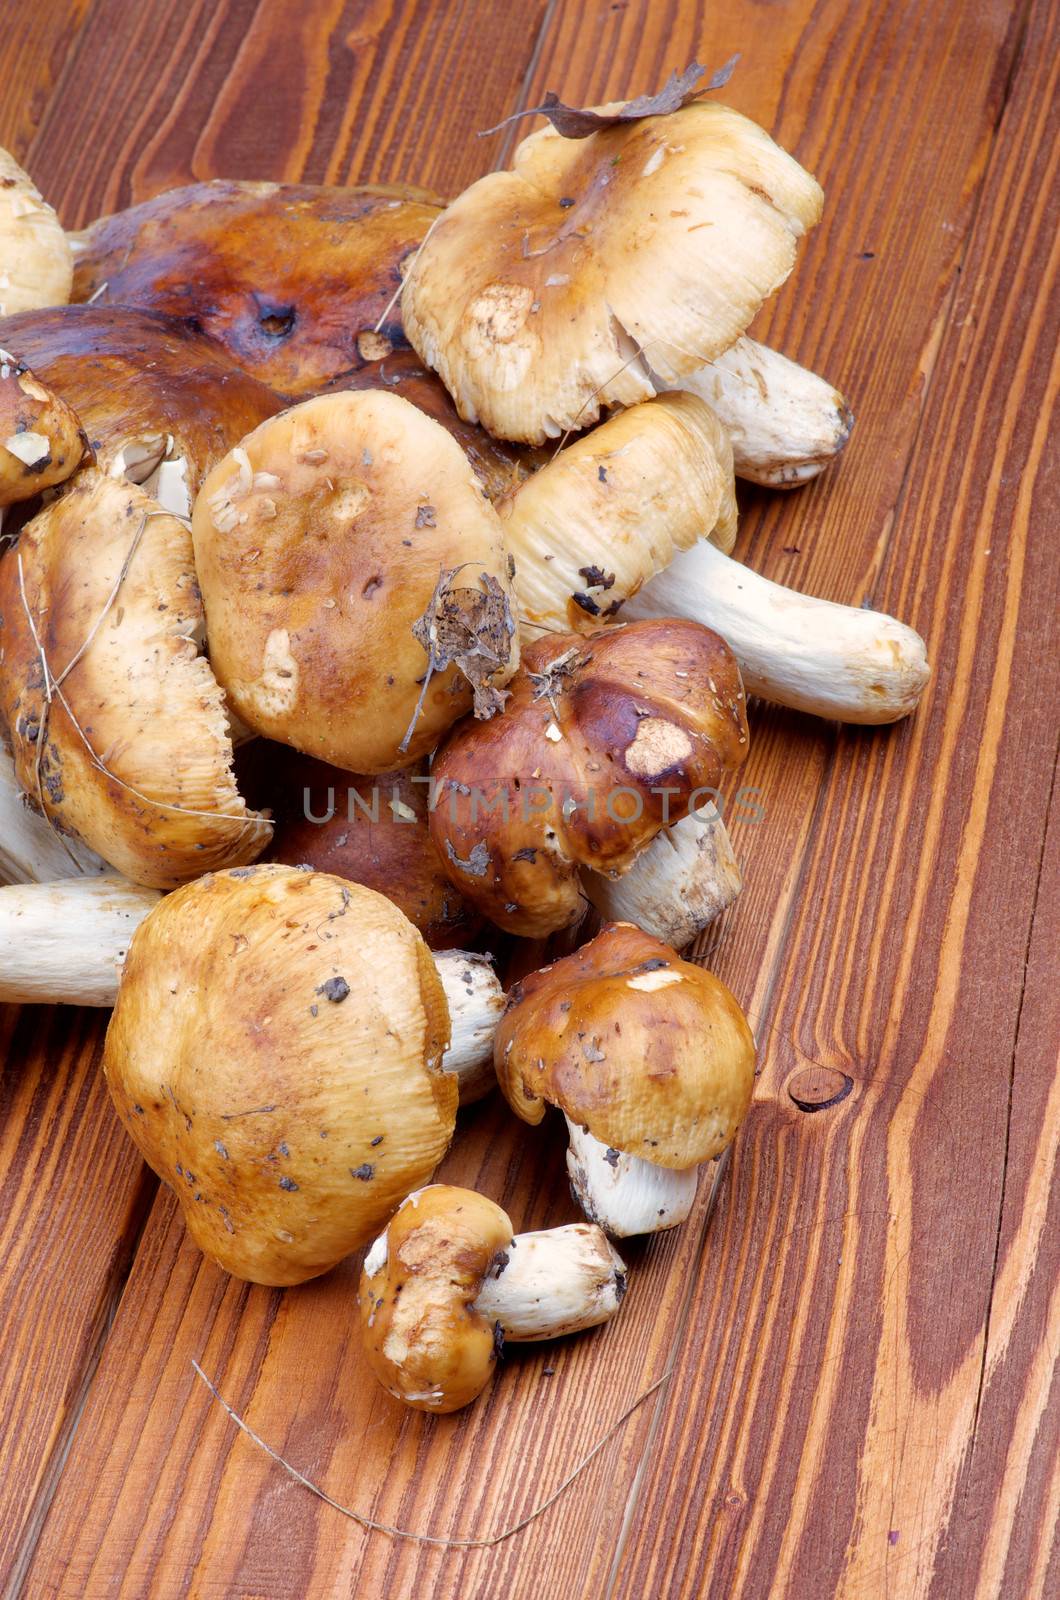 Edible Mushrooms by zhekos